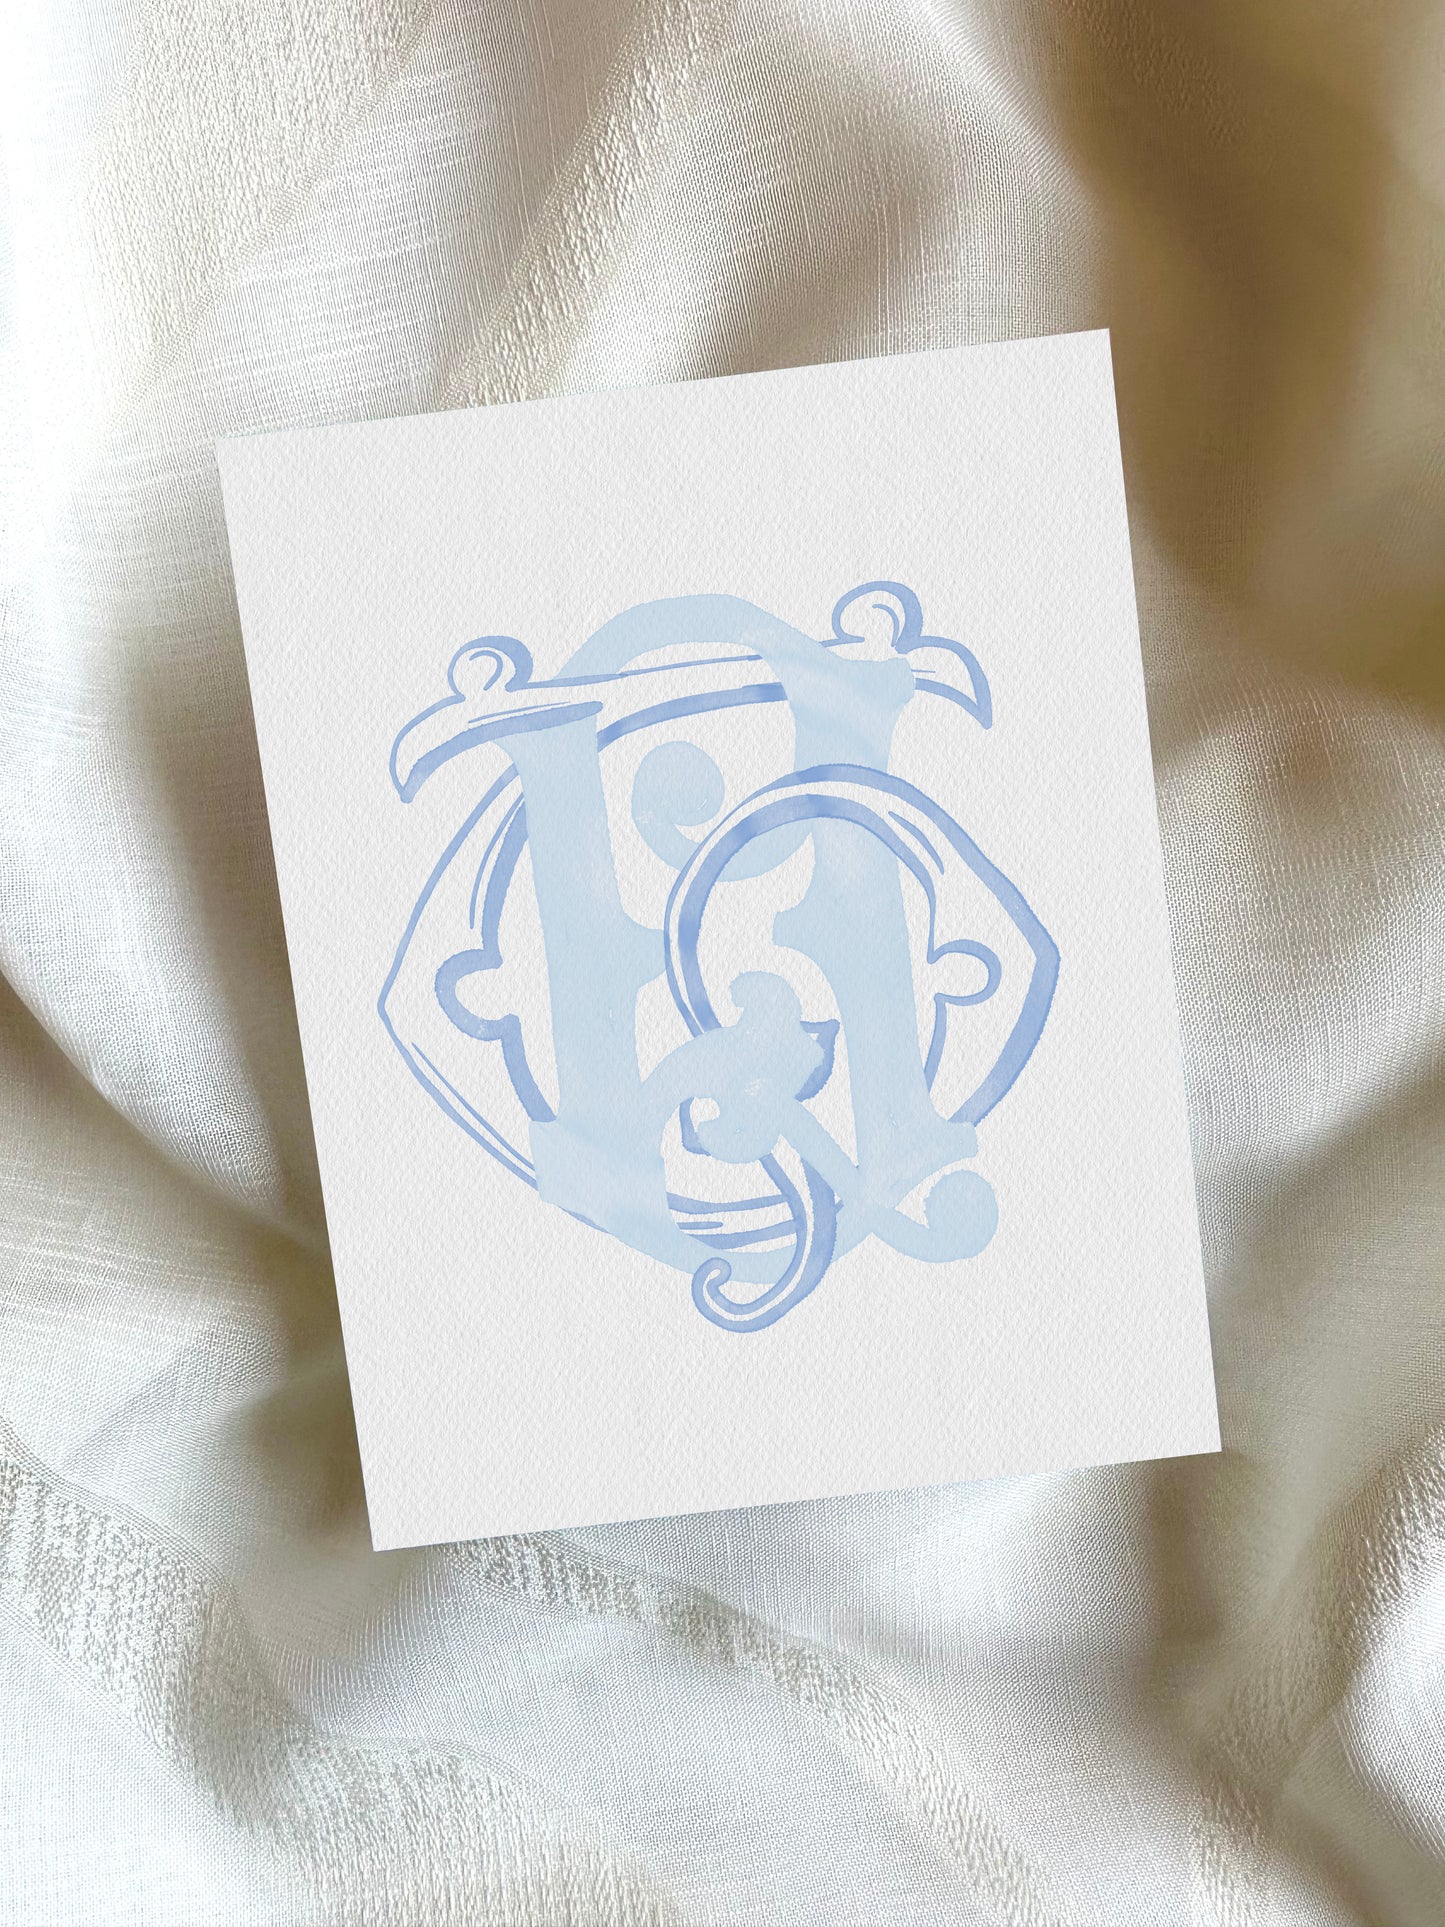 2 Letter Monogram with Letters QT TQ | Digital Download - Wedding Monogram SVG, Personal Logo, Wedding Logo for Wedding Invitations The Wedding Crest Lab